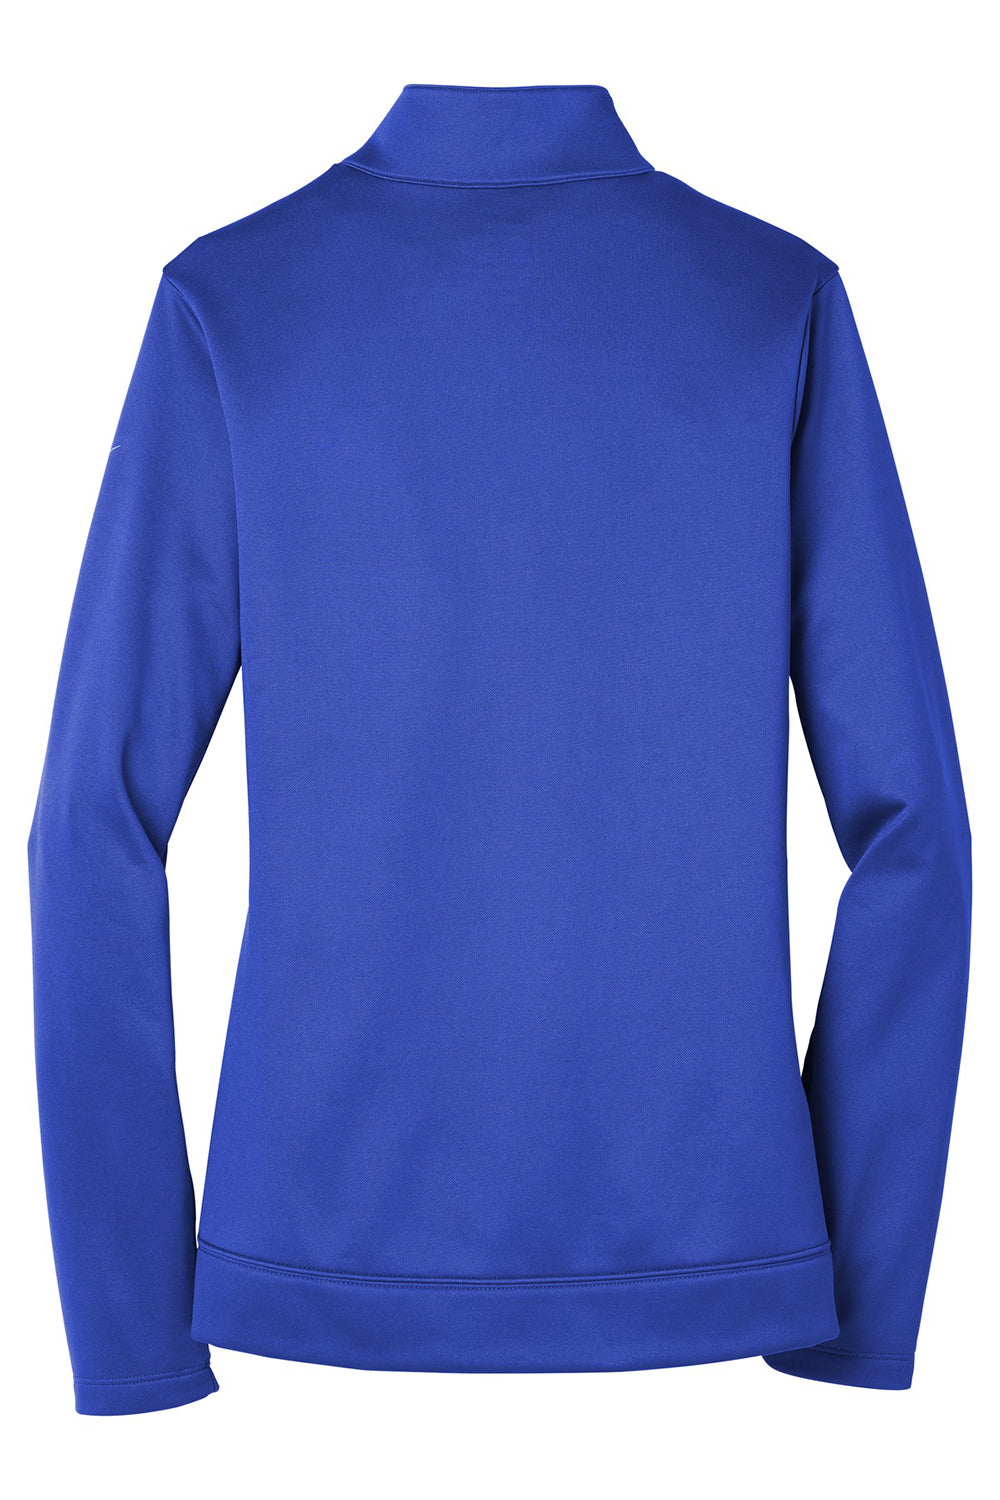 Nike NKAH6260 Womens Therma-Fit Moisture Wicking Fleece Full Zip Sweatshirt Game Royal Blue Flat Back